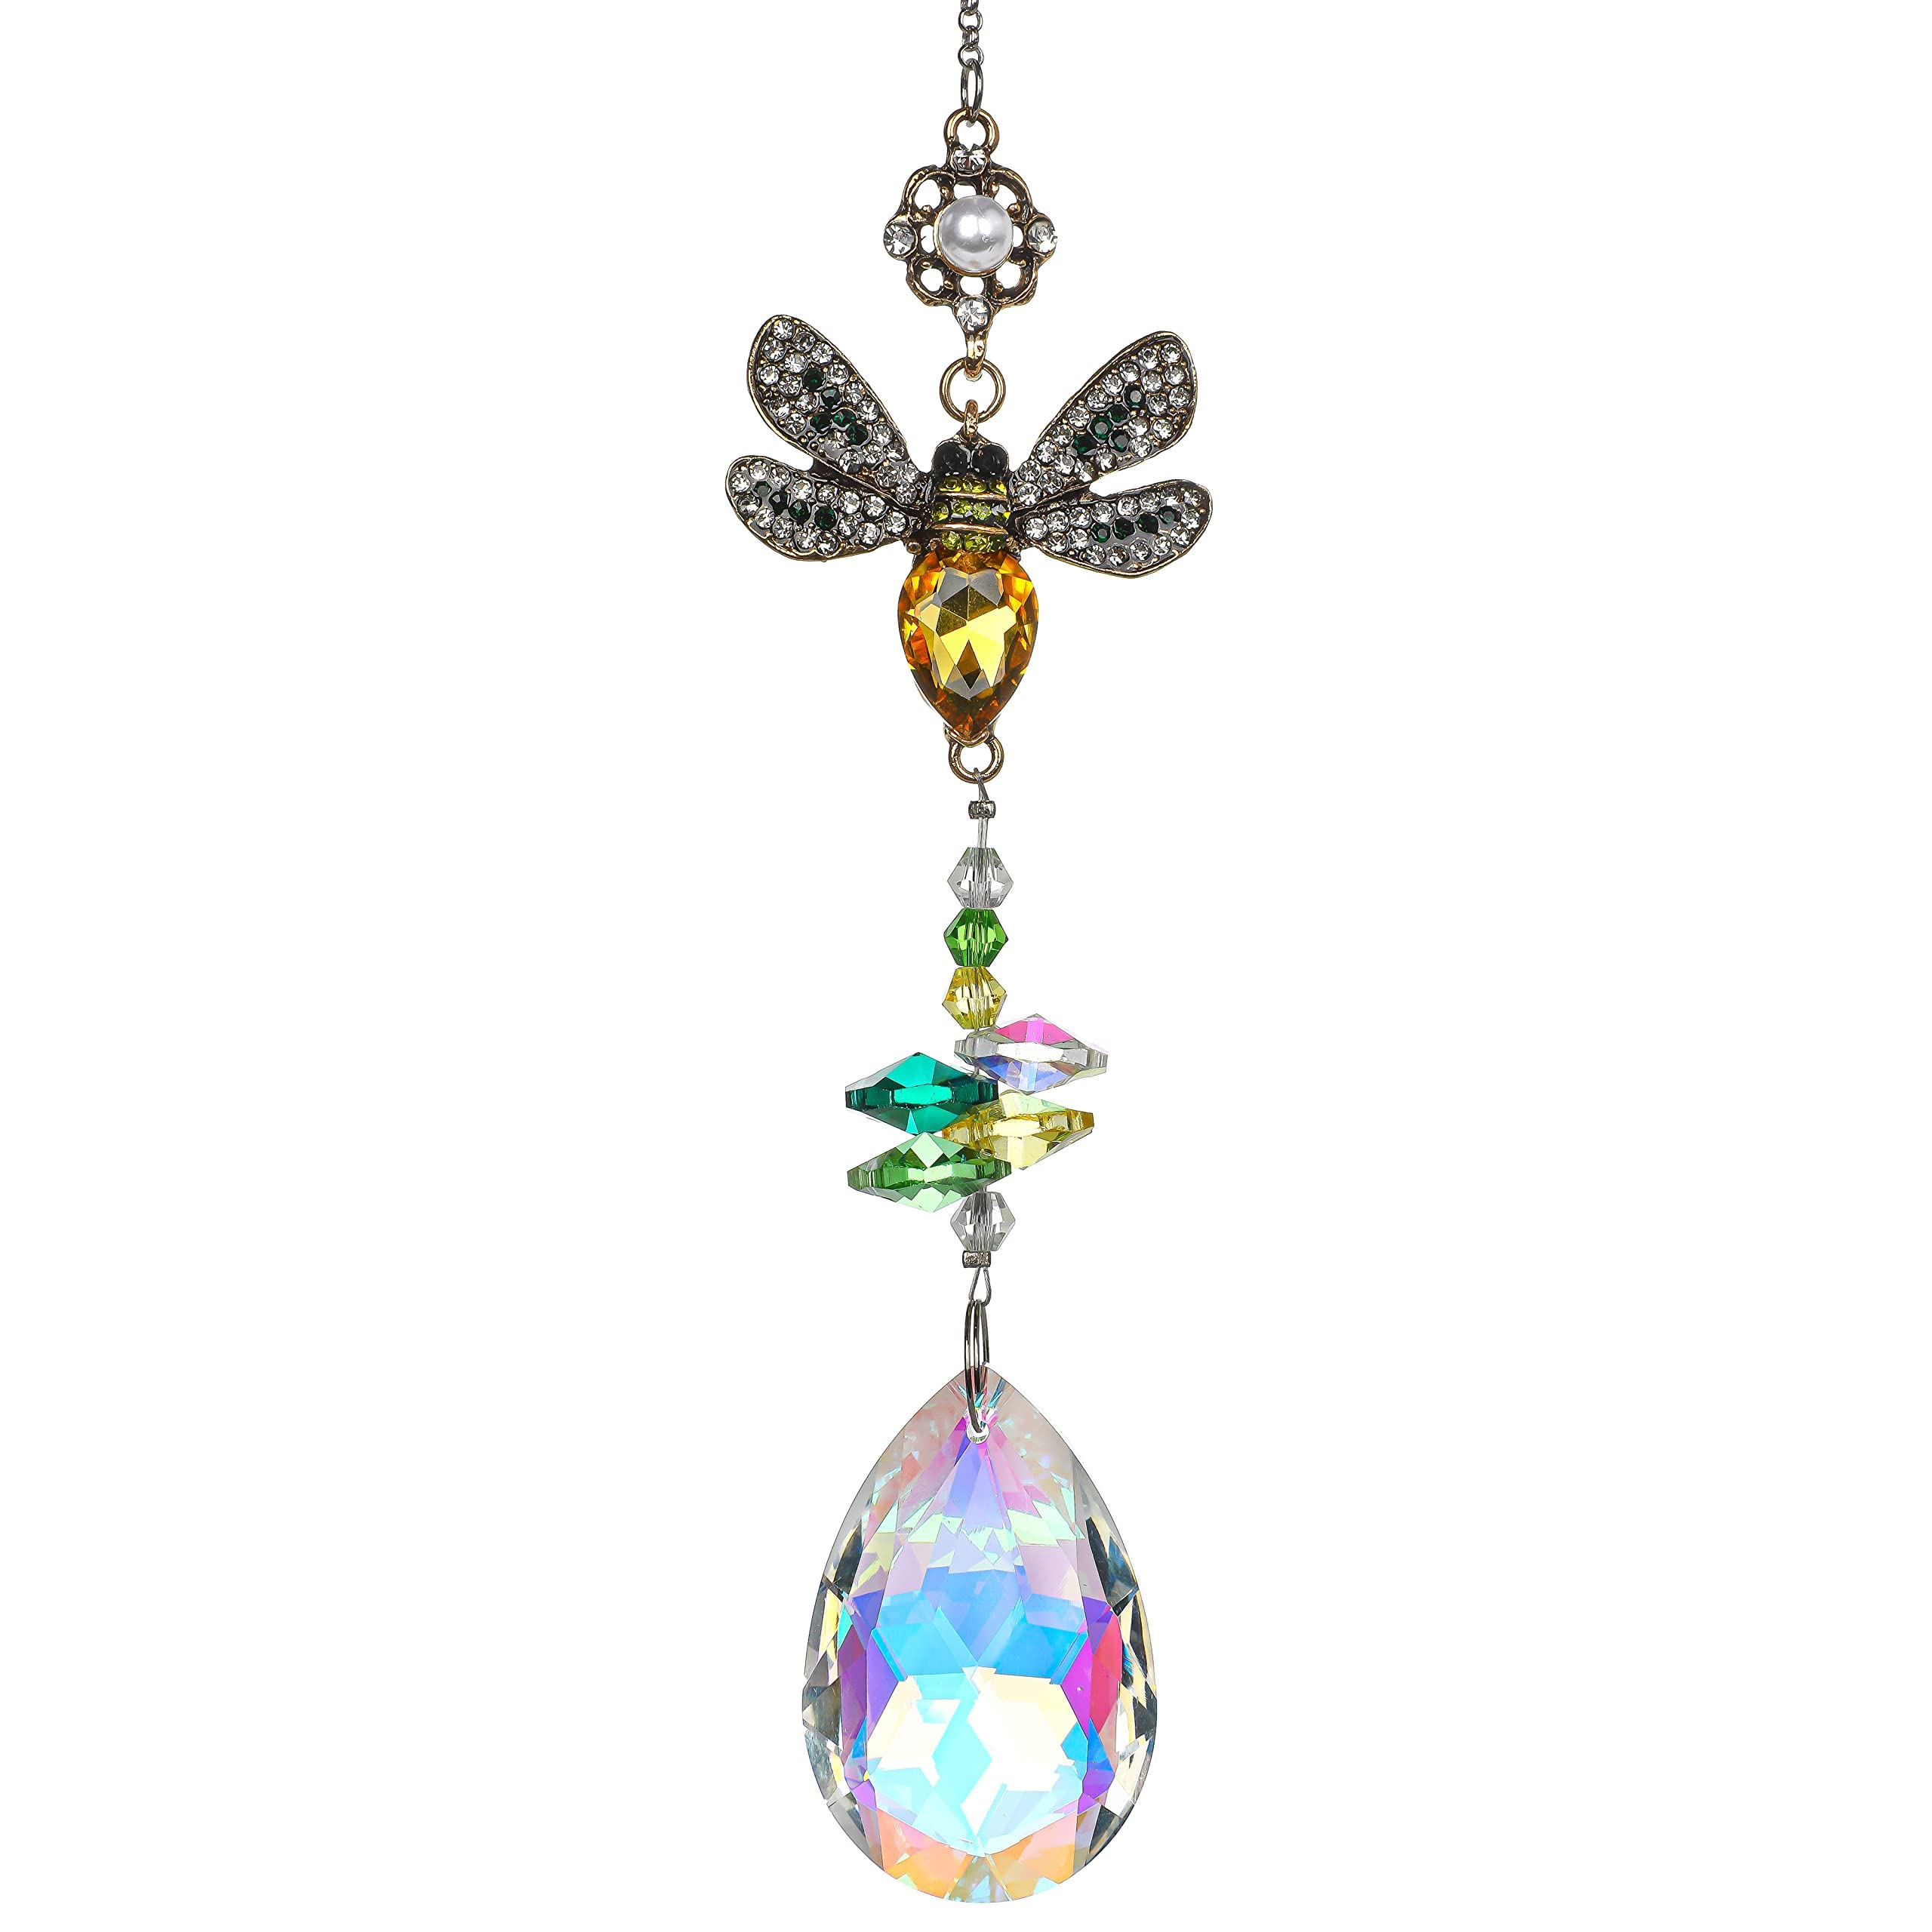 H&D HYALINE & DORA Crystal Suncatchers Bee Prism Rhinestones Ornament, Colorful Diamond Decor Prisms for Windows Wall Home Wedding Hanging